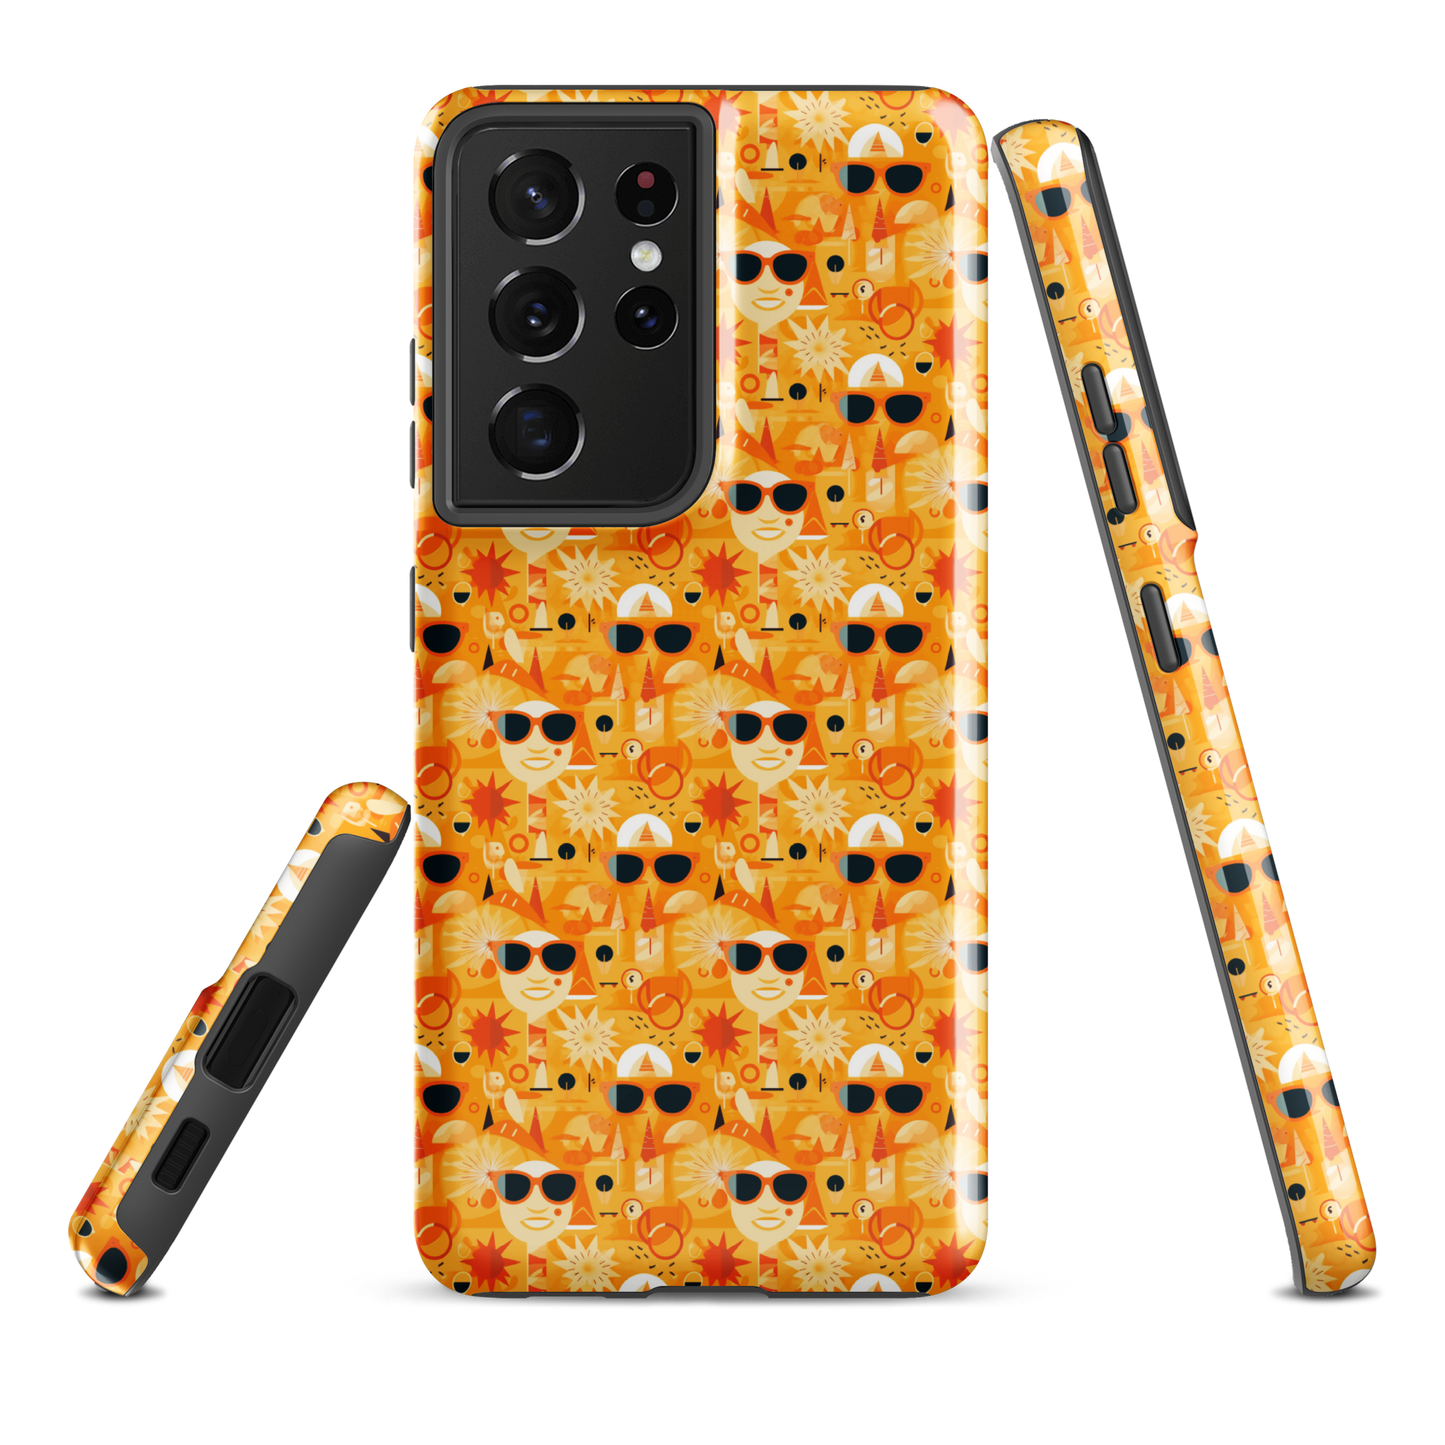 Sol Tough Case, Shockproof Phone Case,Cool Designed Phone Cases, Pocket-friendly